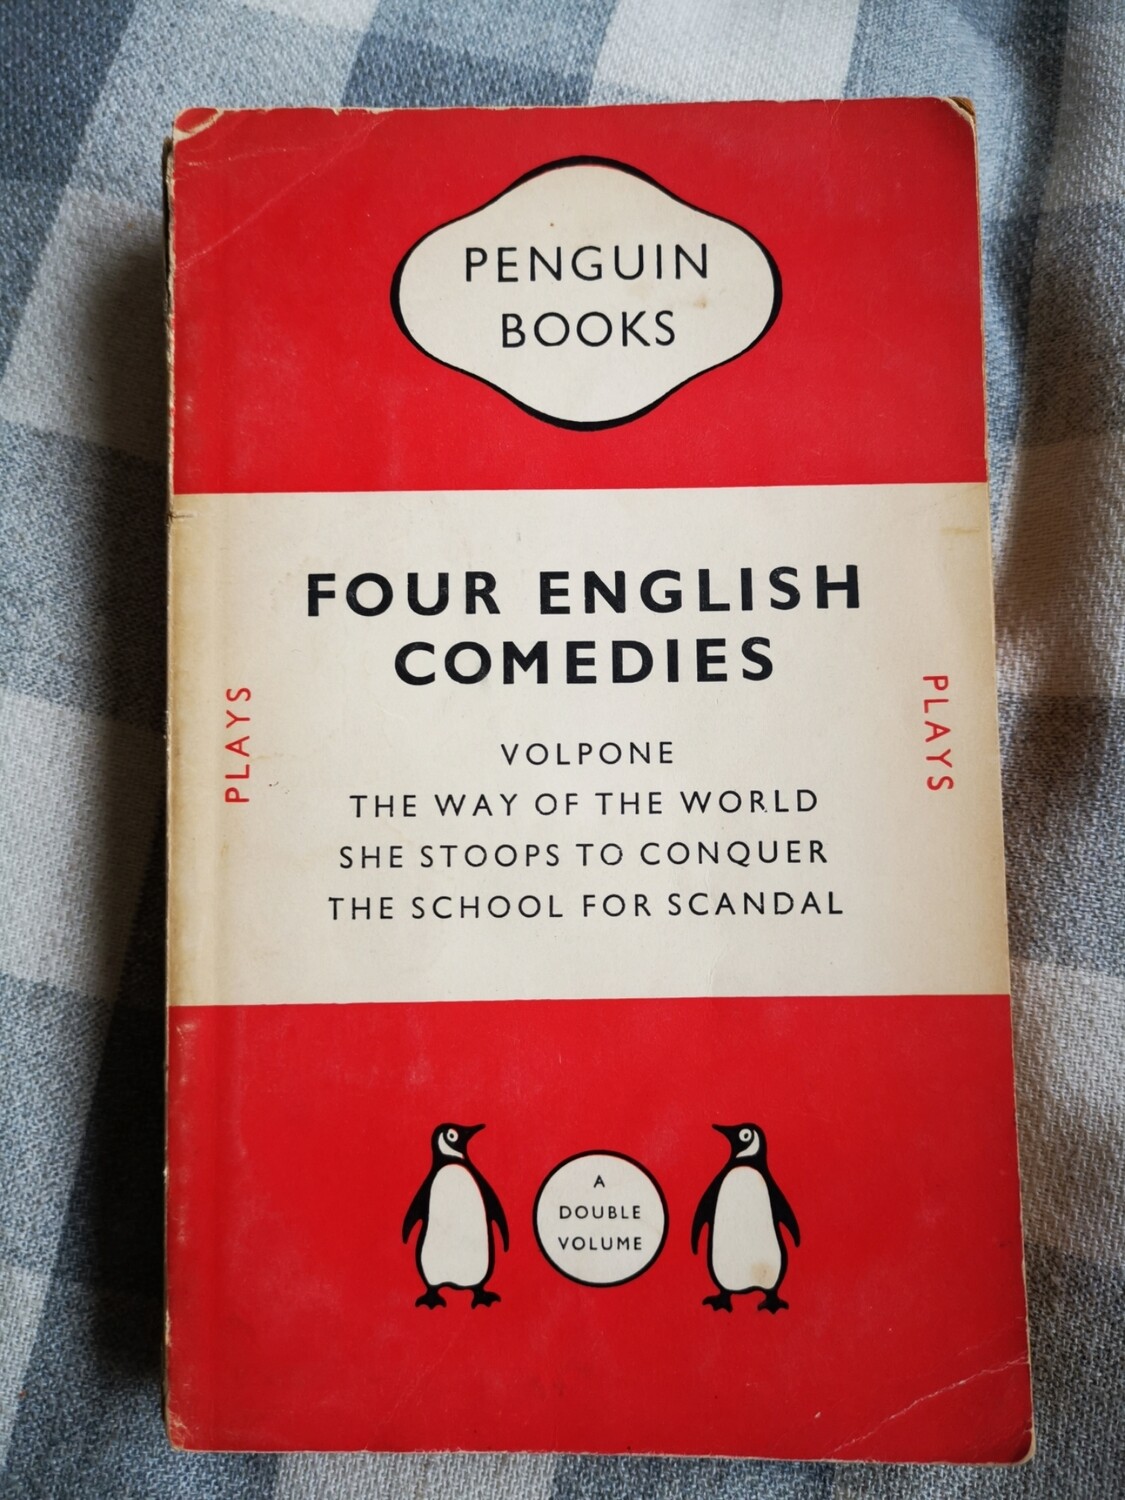 Four English comedies